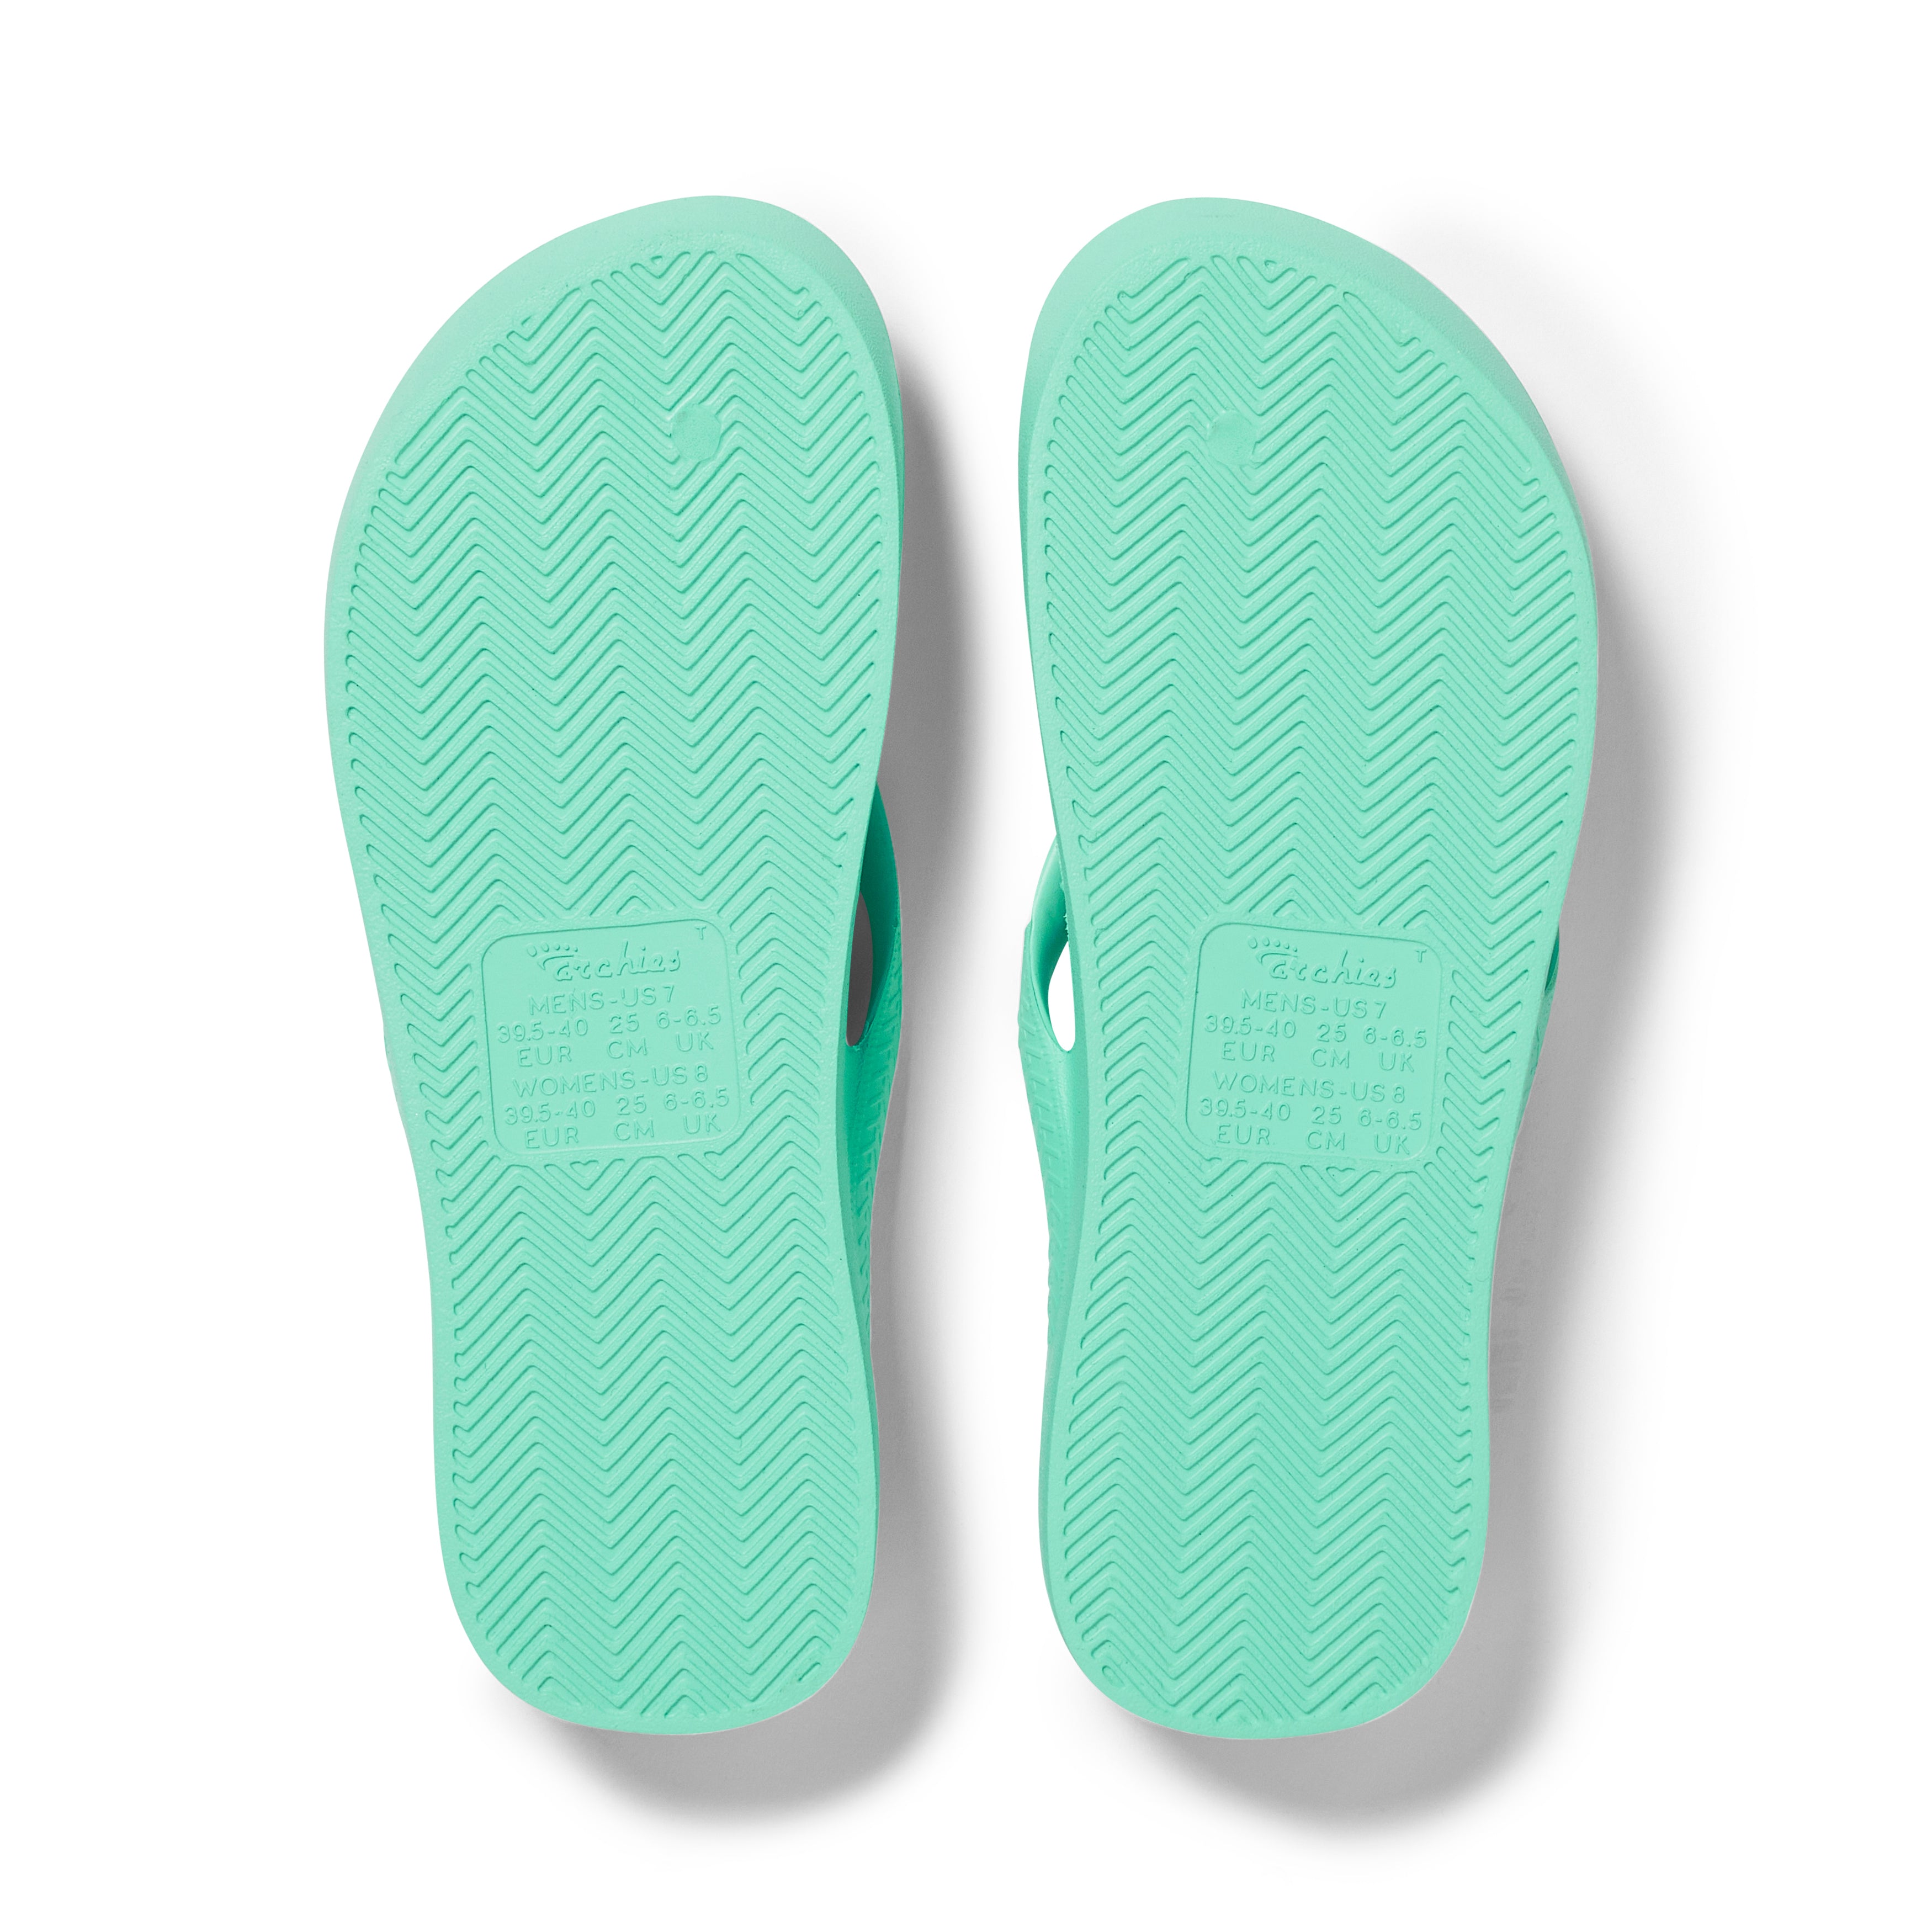 Mint Green - Arch Support Flip Flops – Archies Footwear LLC